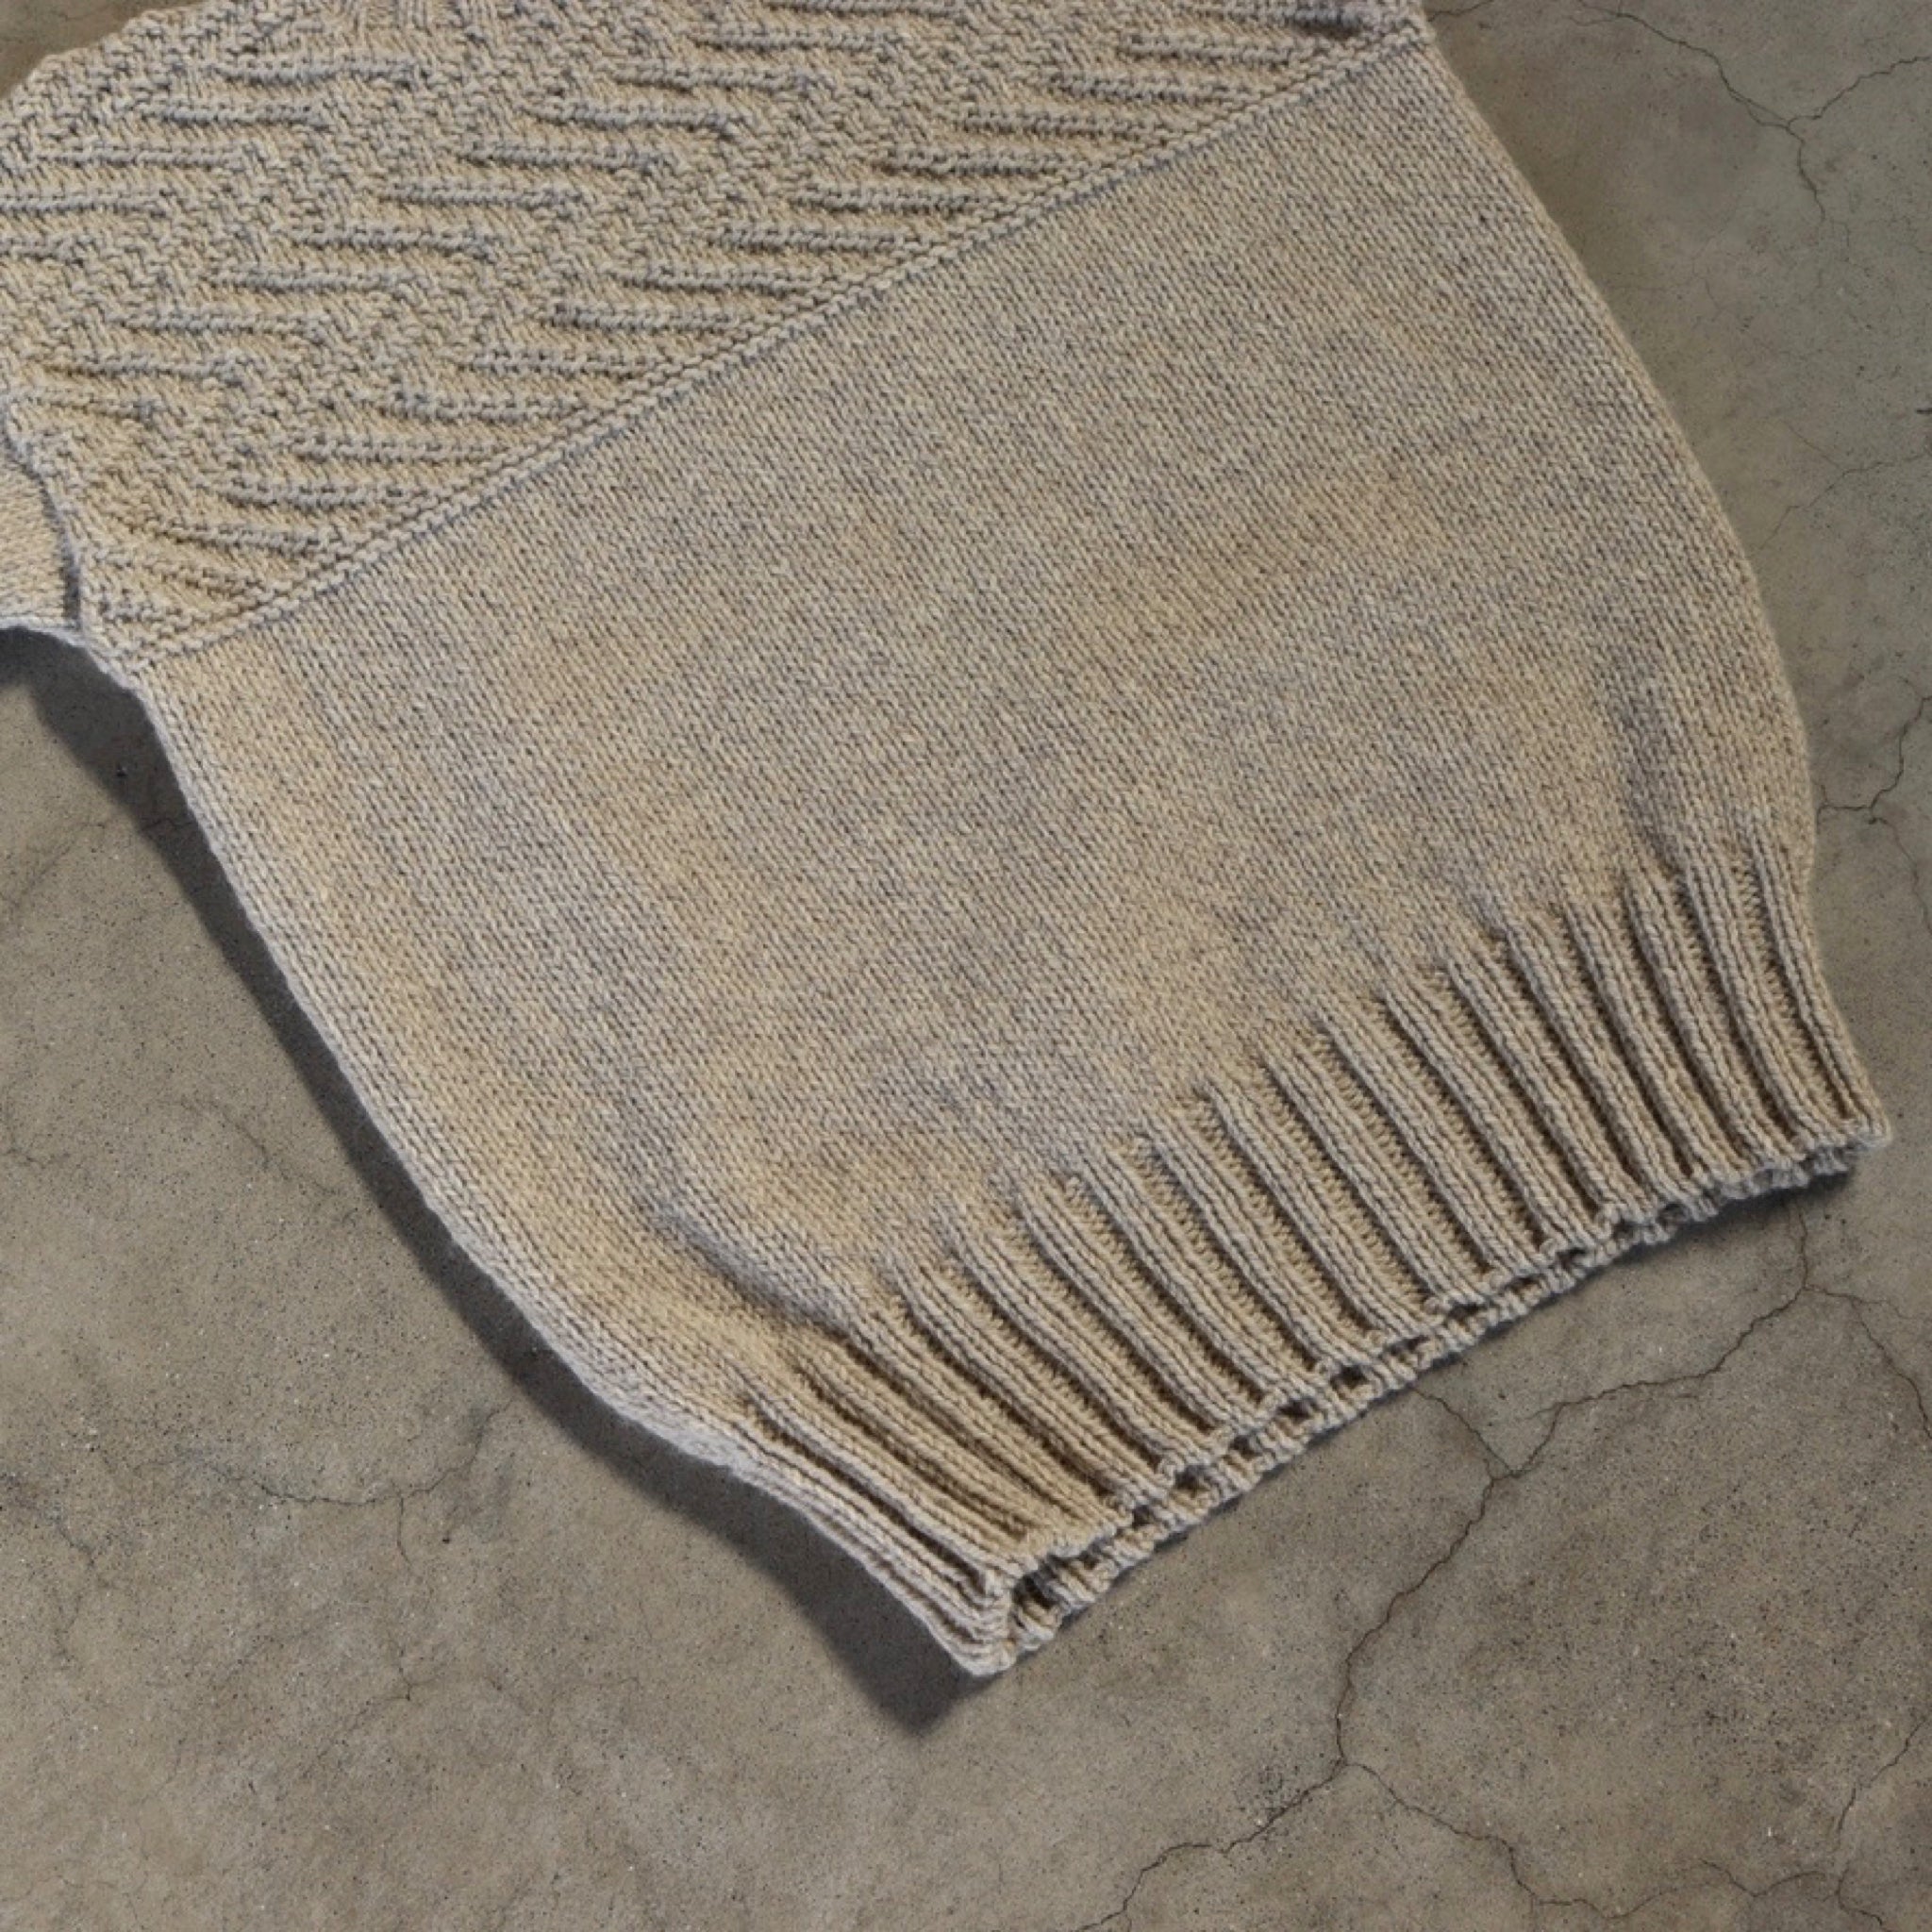 Kesennuma knitting etude - 13